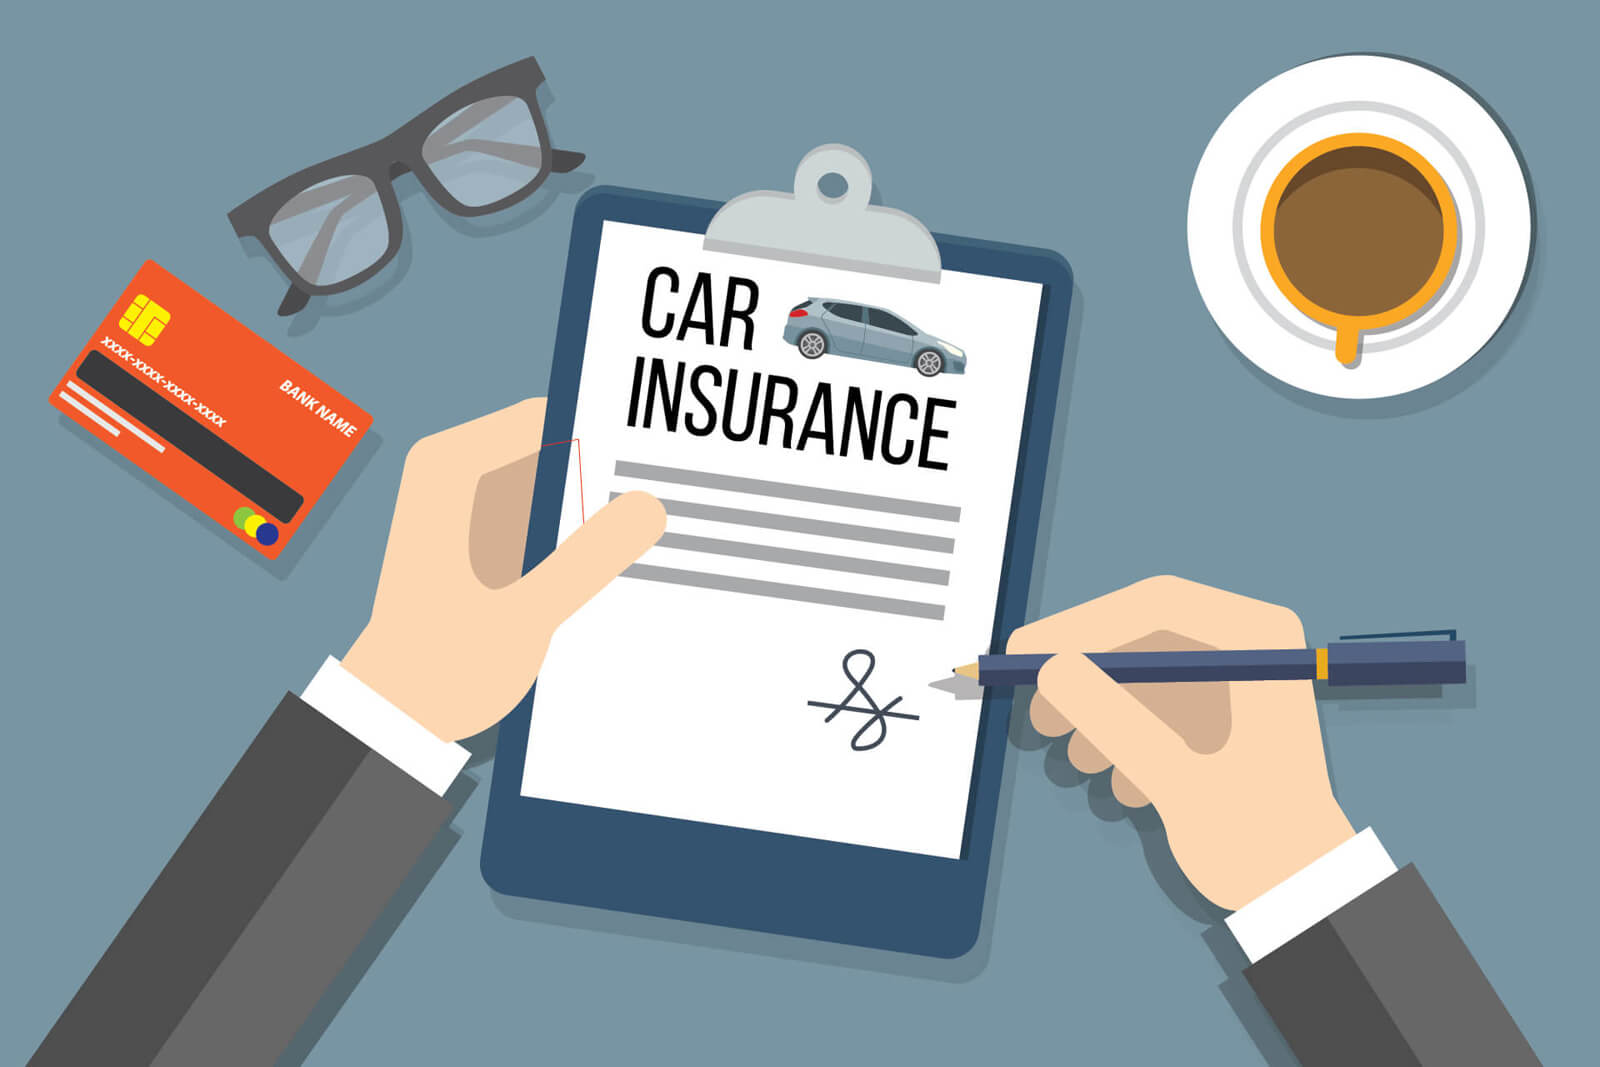 c car insurance policy signature